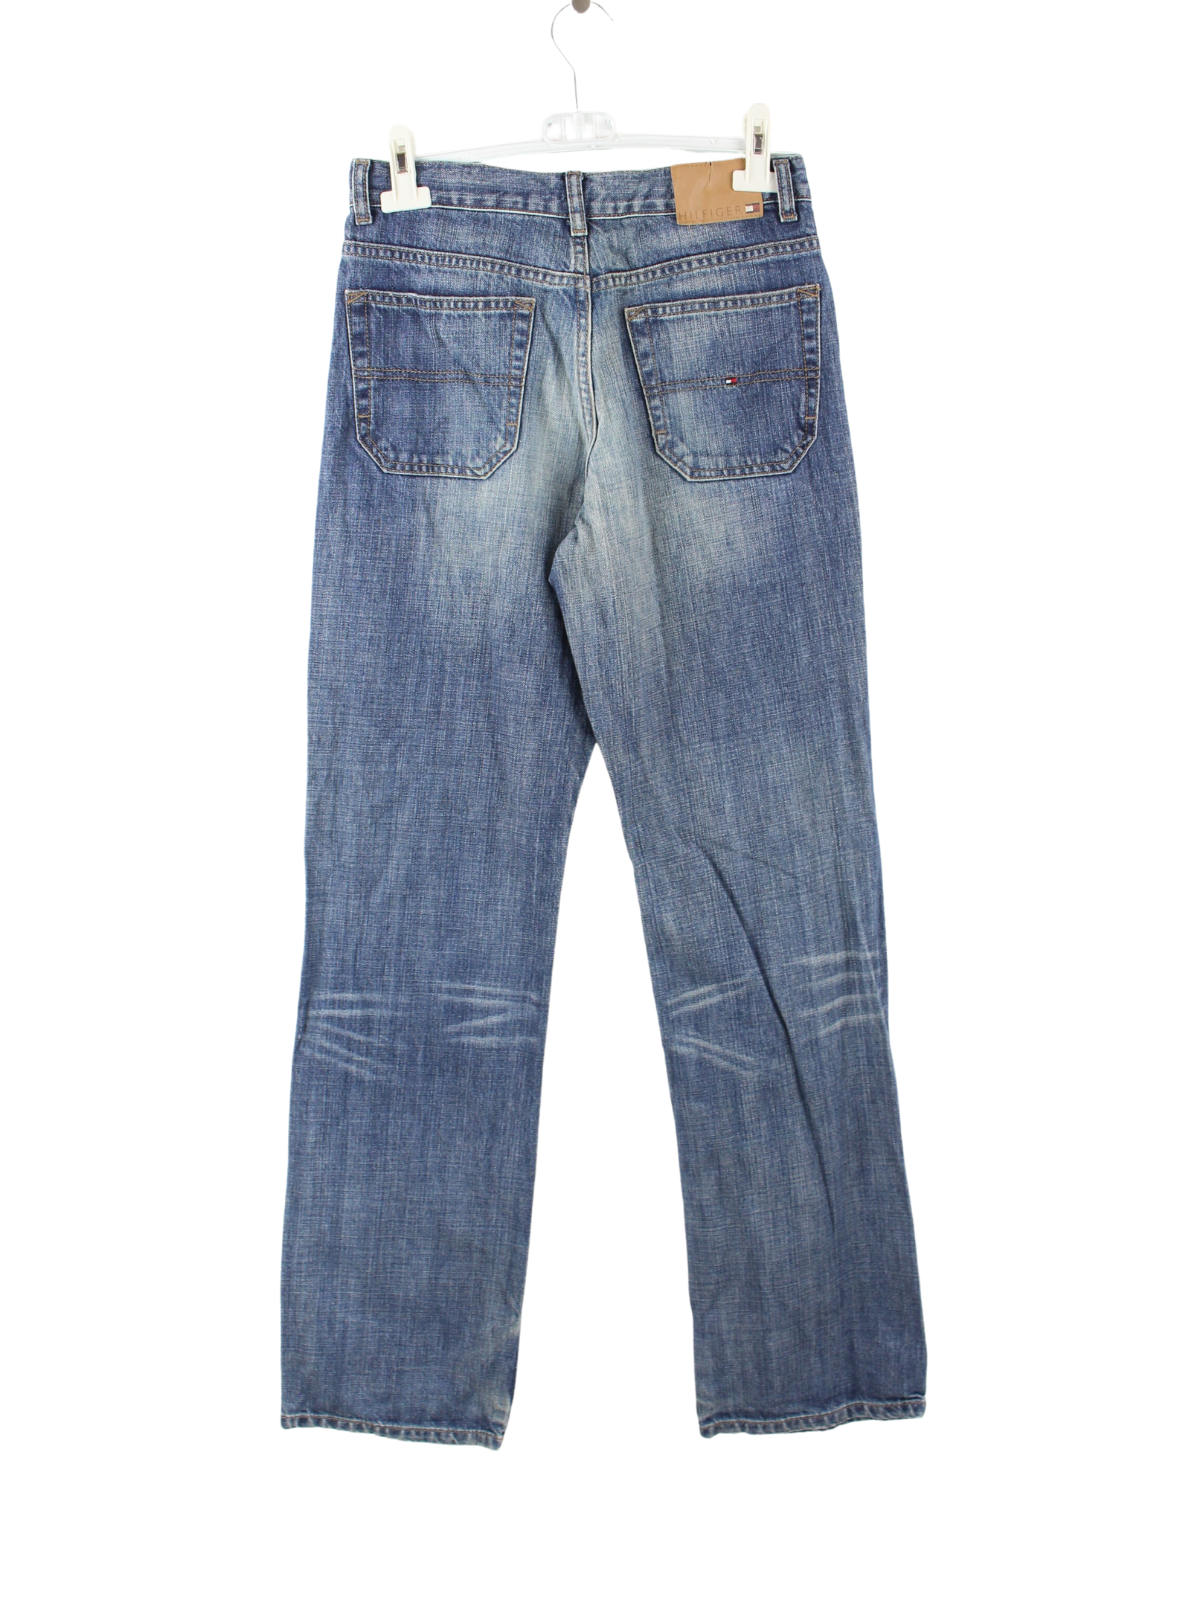 Tommy Hilfiger Women's Jeans Blue Gr. 16 XL